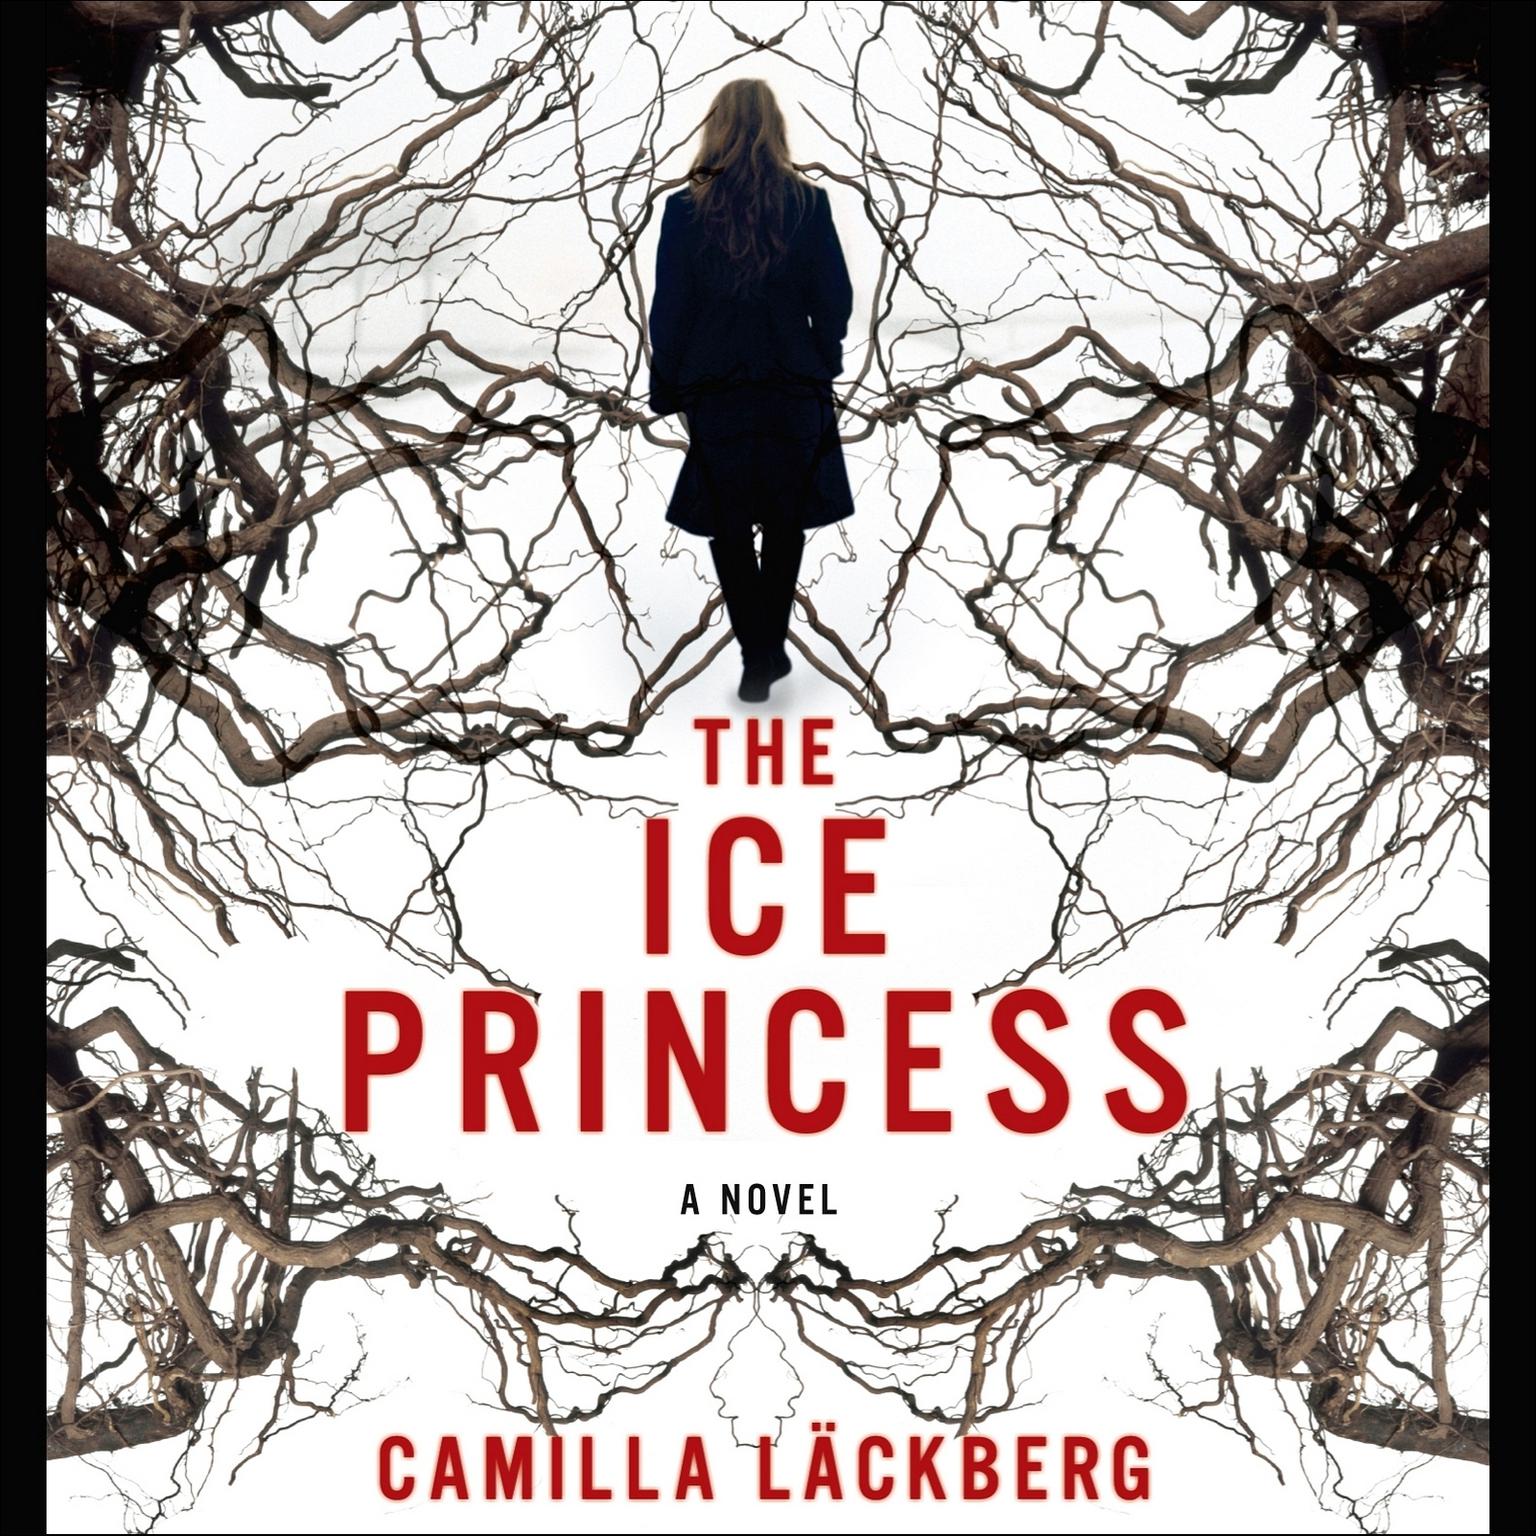 The Ice Princess Audiobook, by Camilla Läckberg